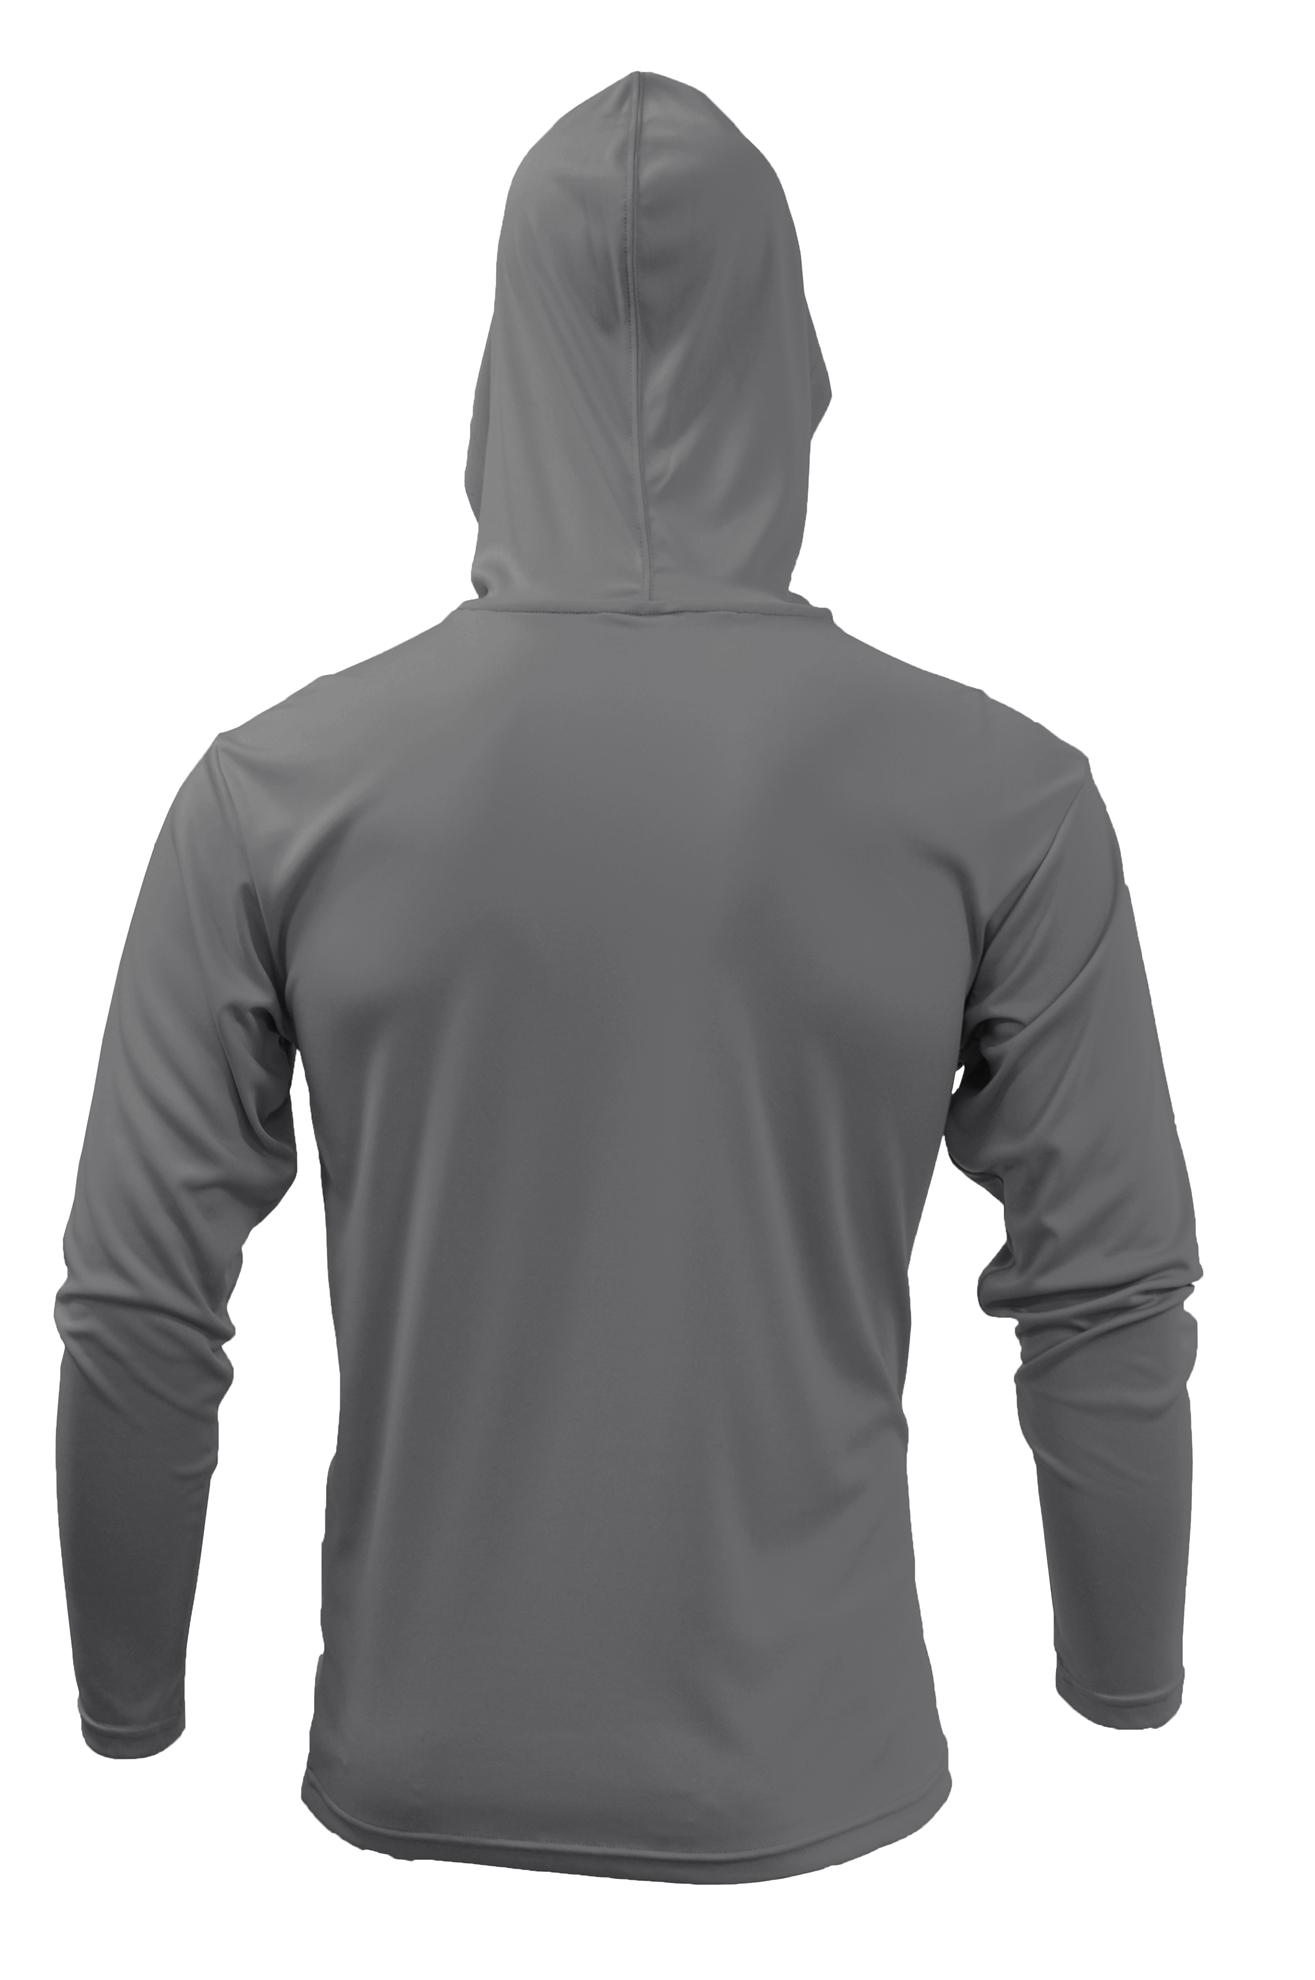 BAW Athletic Wear DT86 - Men's Dry-Tek Long Sleeve Shirt $9.75 - T-Shirts